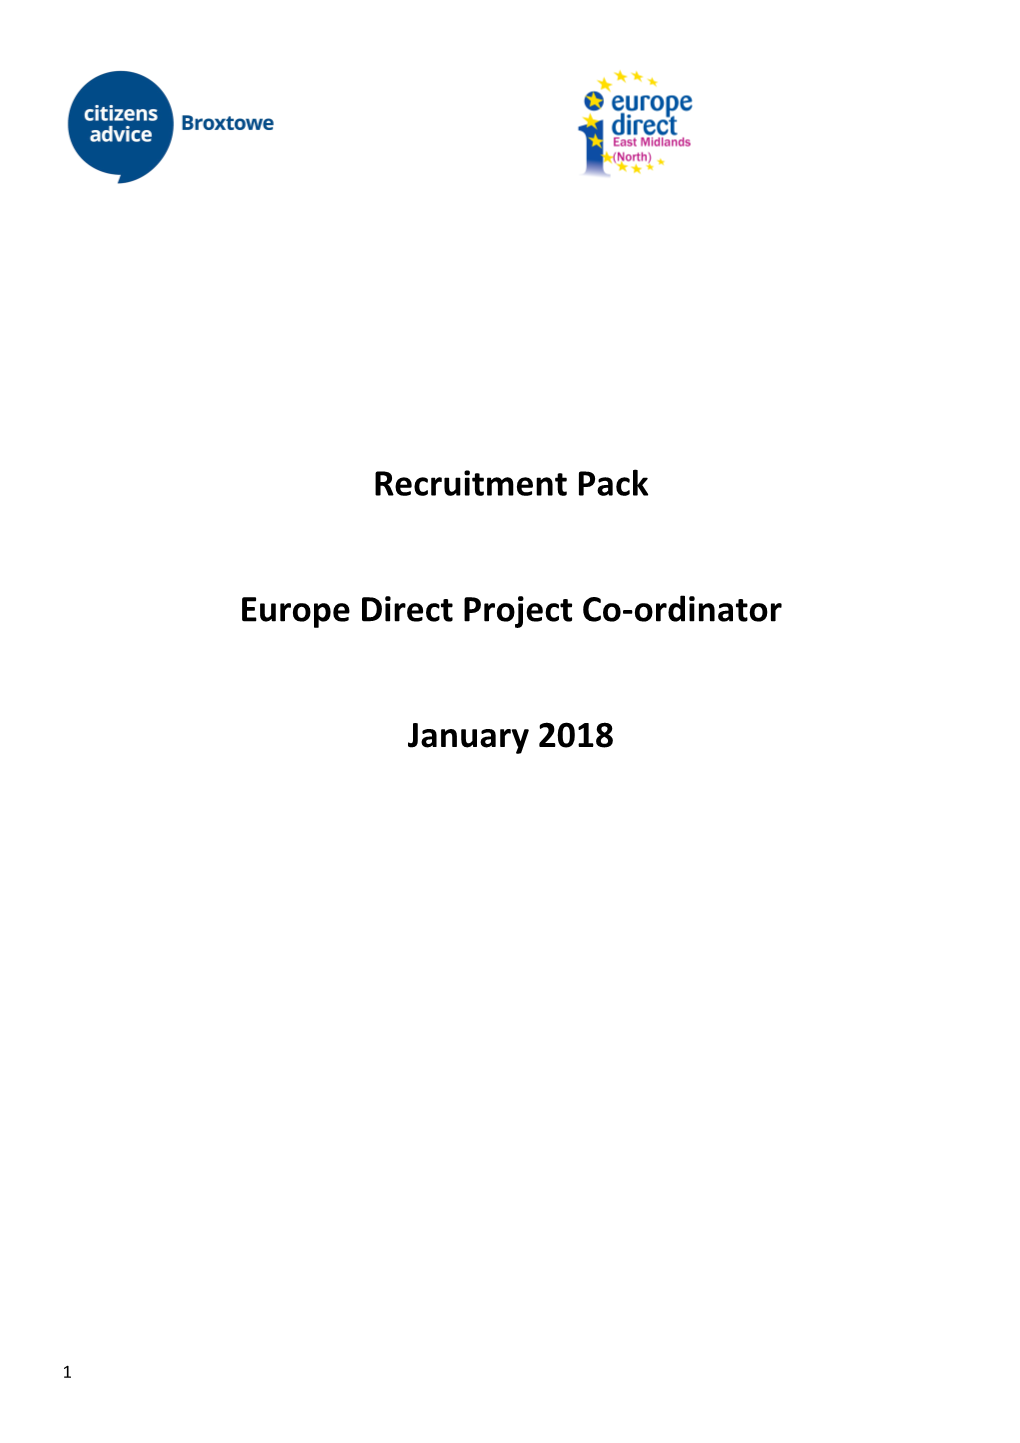 Europe Direct Project Co-Ordinator